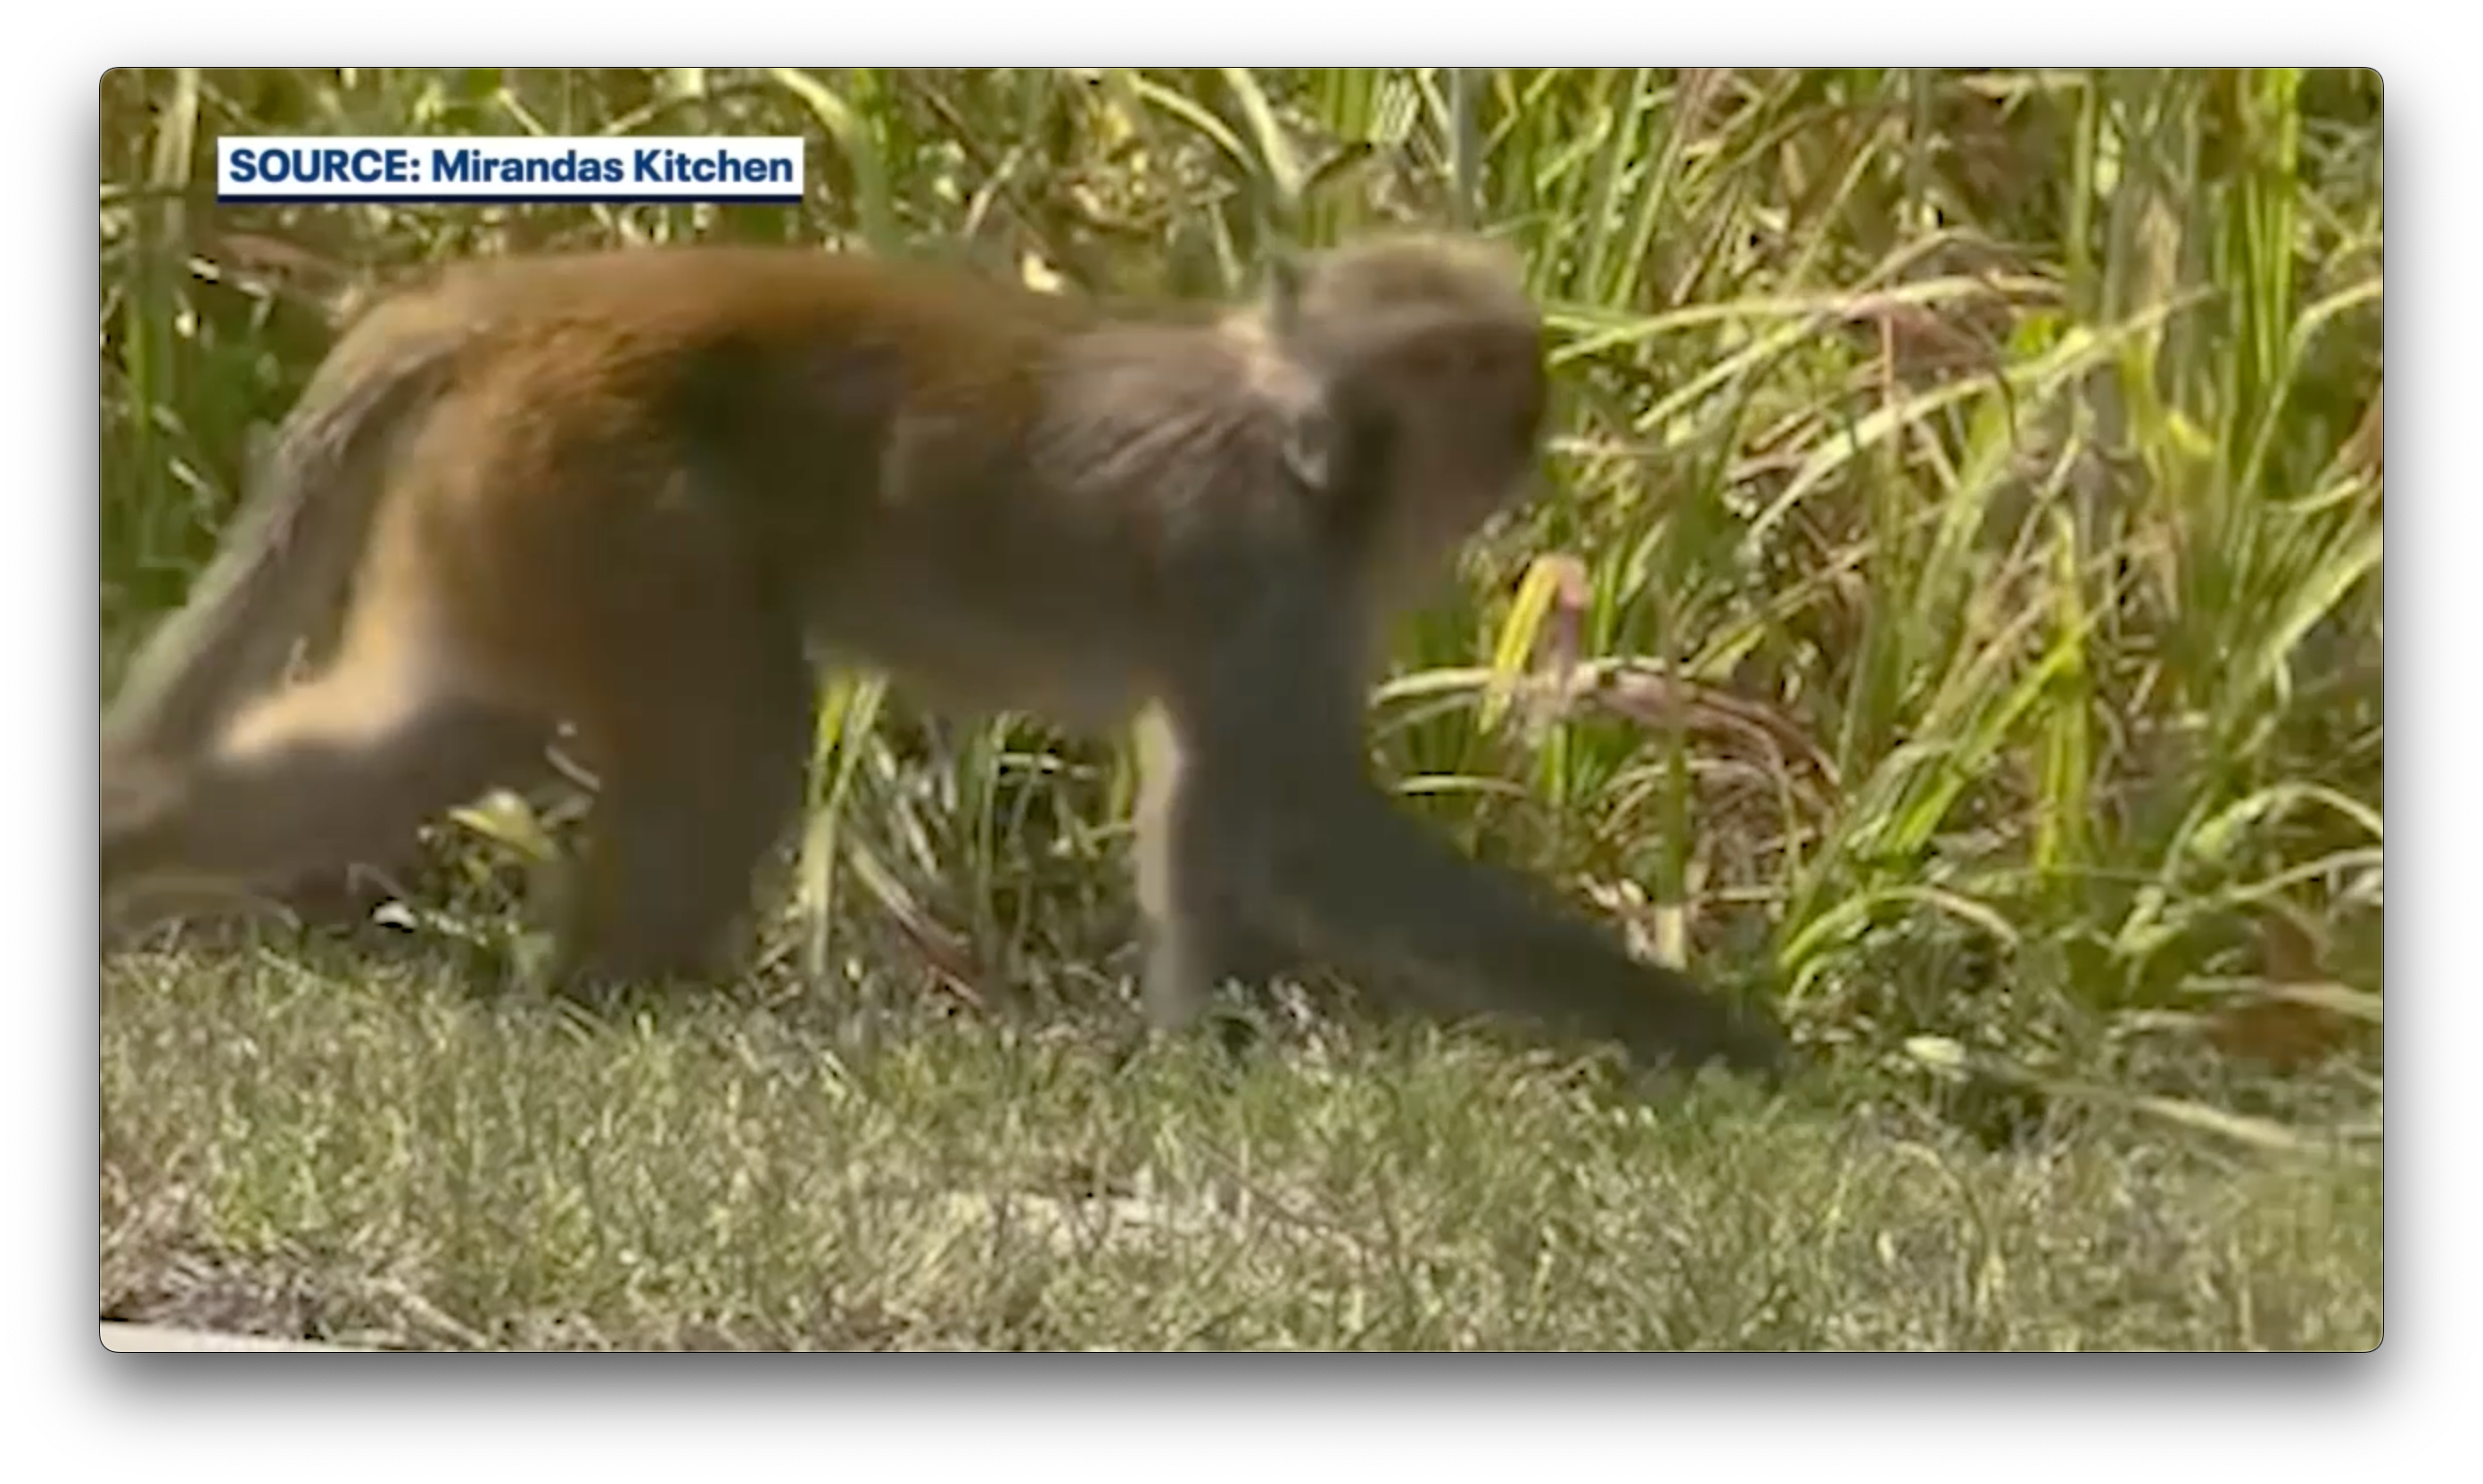 News :Wild monkey spotted roaming Florida neighborhood: ‘Absolutely crazy’